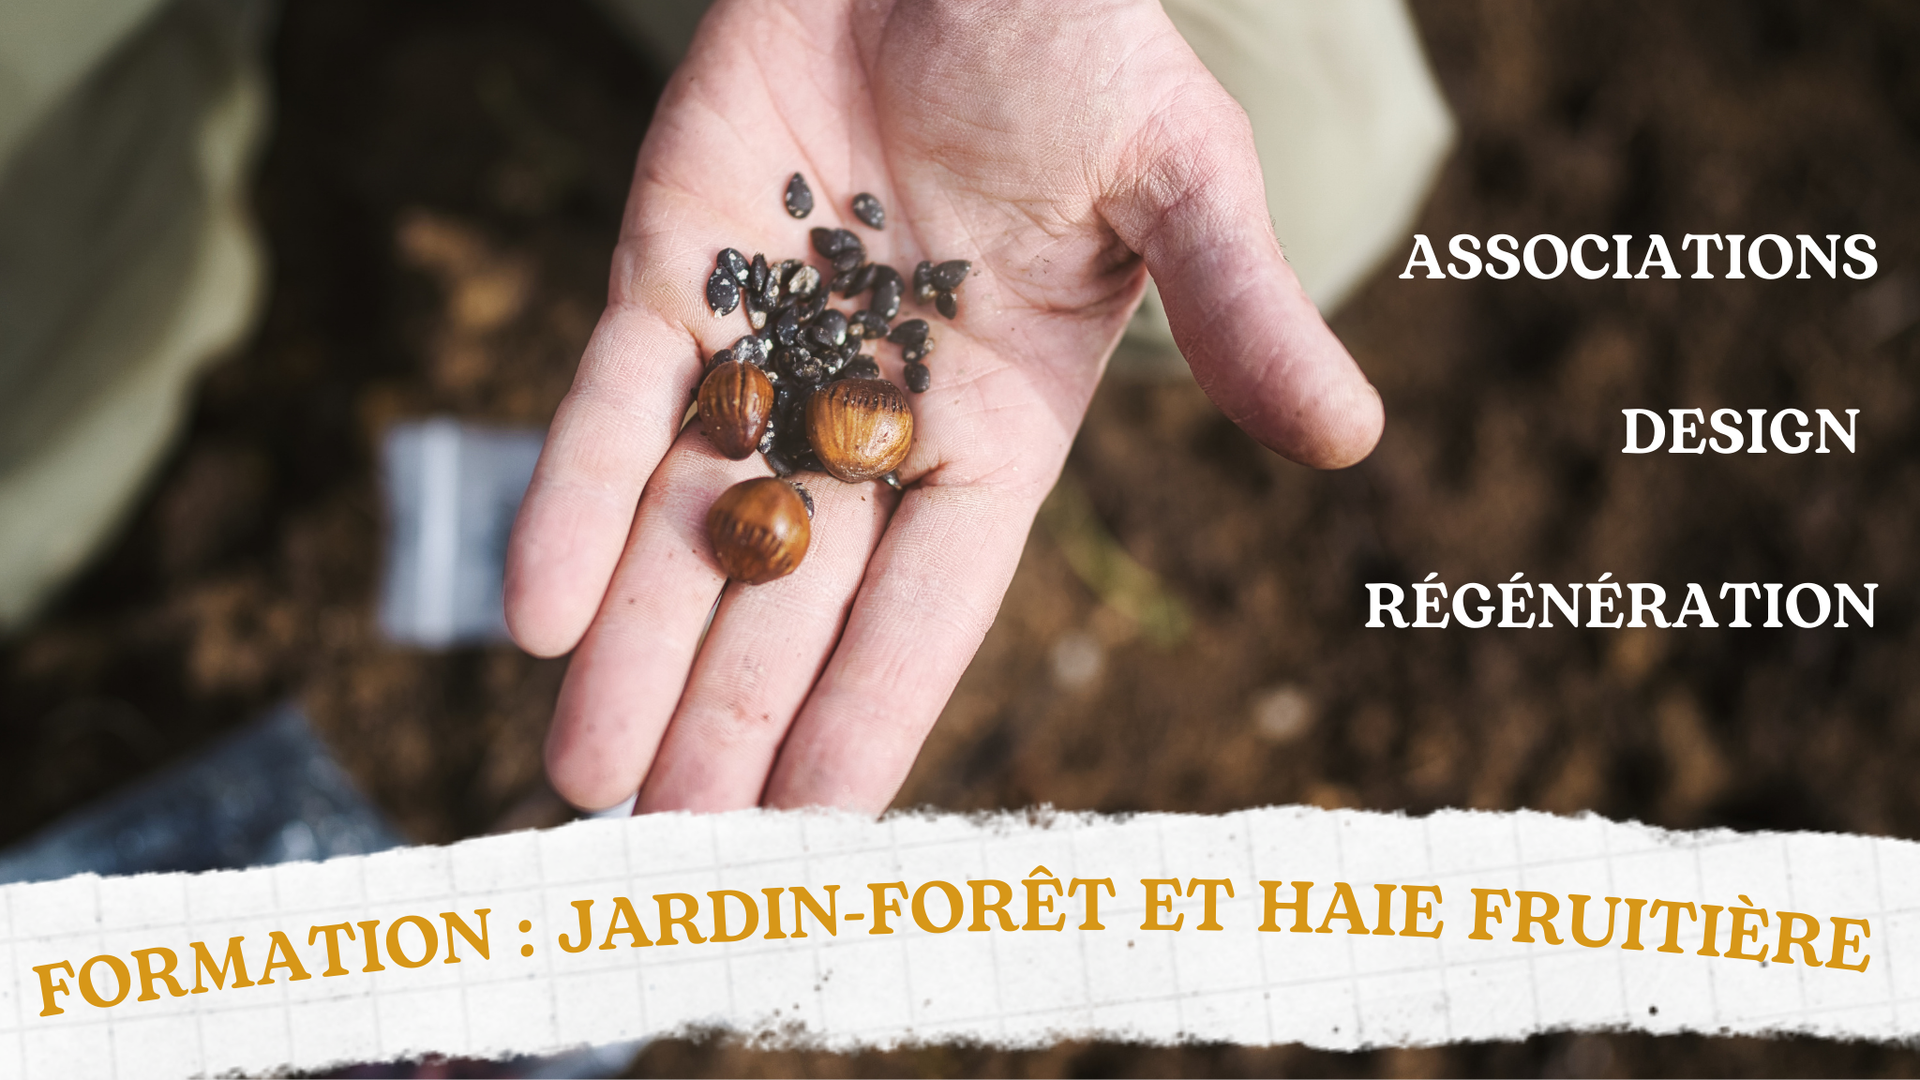 FORMATION : Jardin-forêt et Haie fruitière